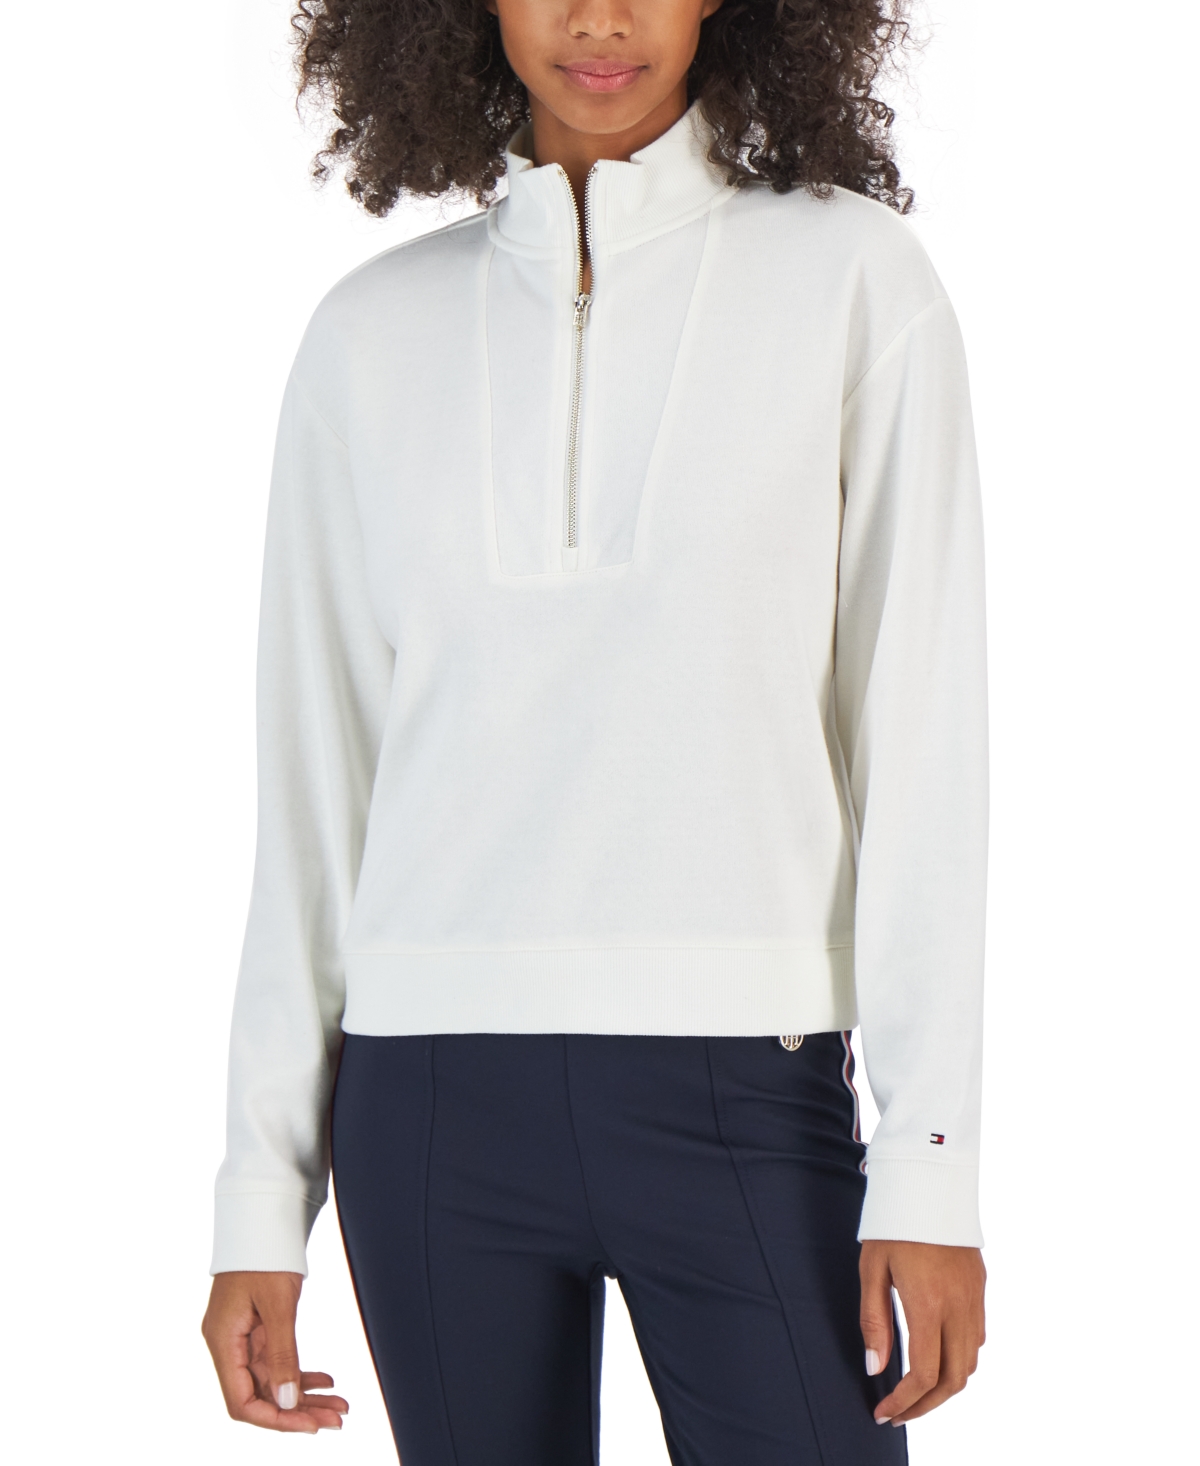  Tommy Hilfiger Women's 1/2-Zip Solid Cropped Sweatshirt